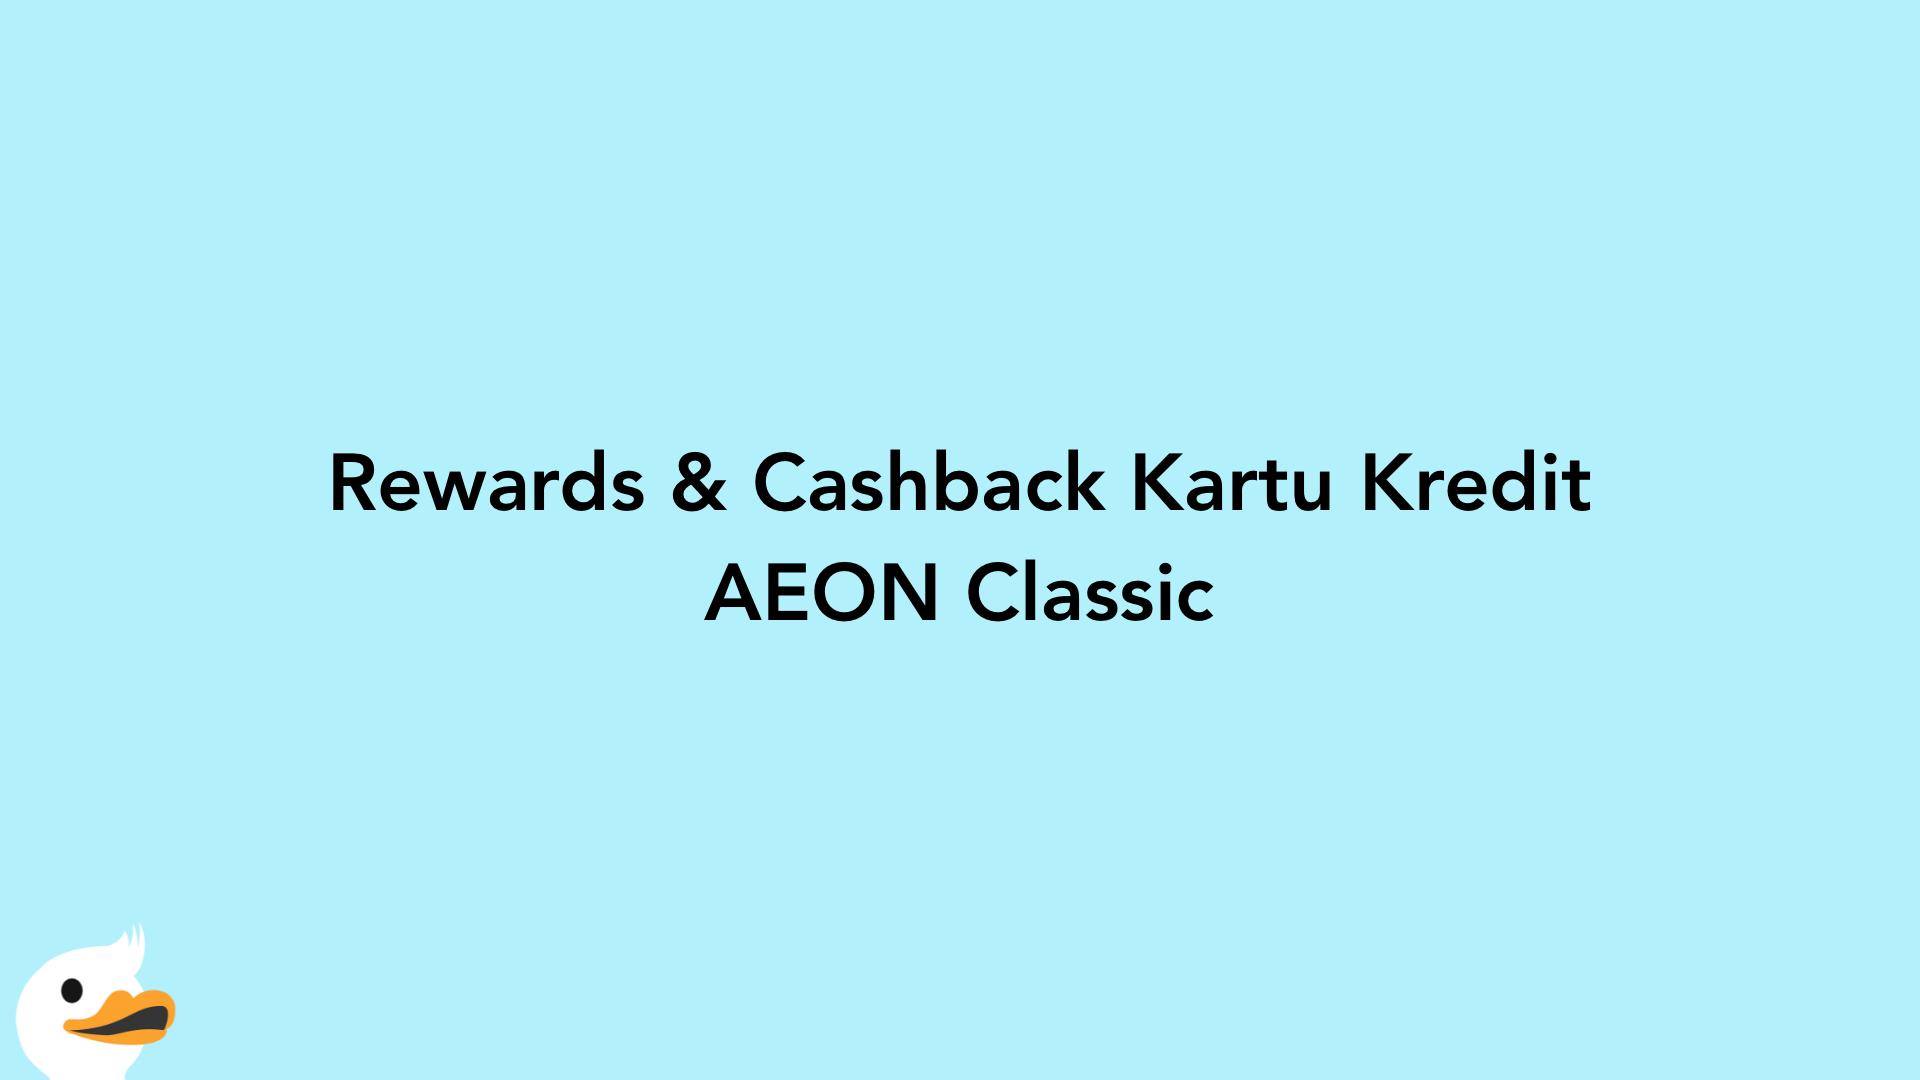 Rewards & Cashback Kartu Kredit AEON Classic